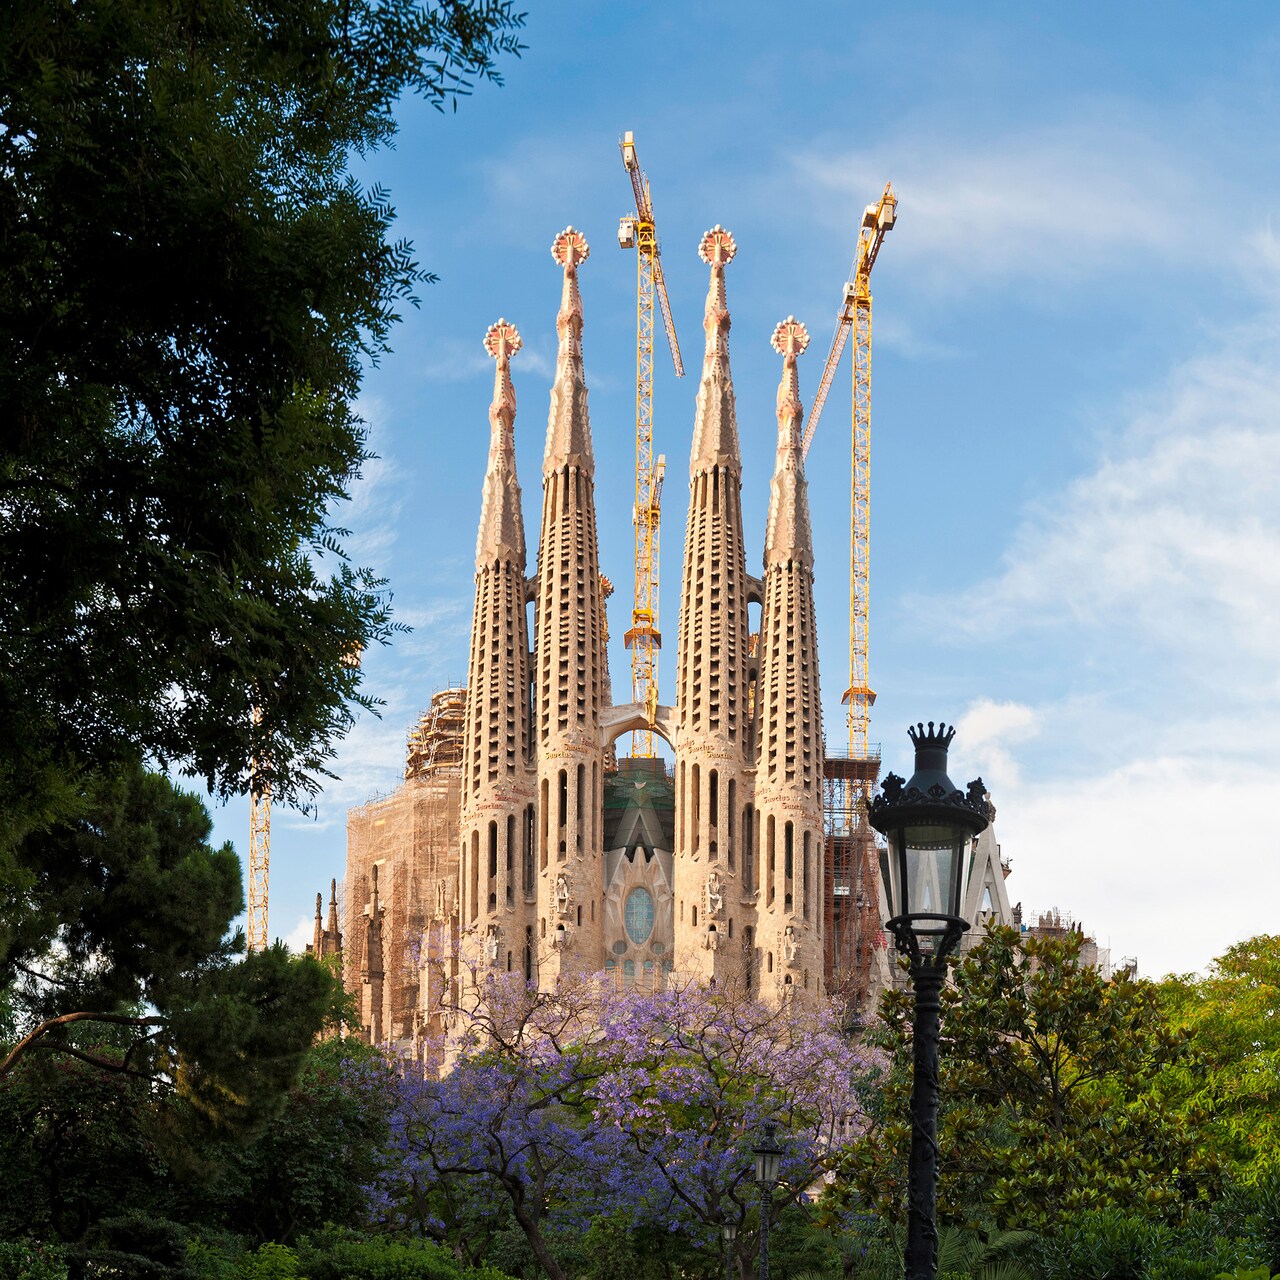 The whimsical spires of Gaudí's Sagrada Família in Barcelona loom above the treetops